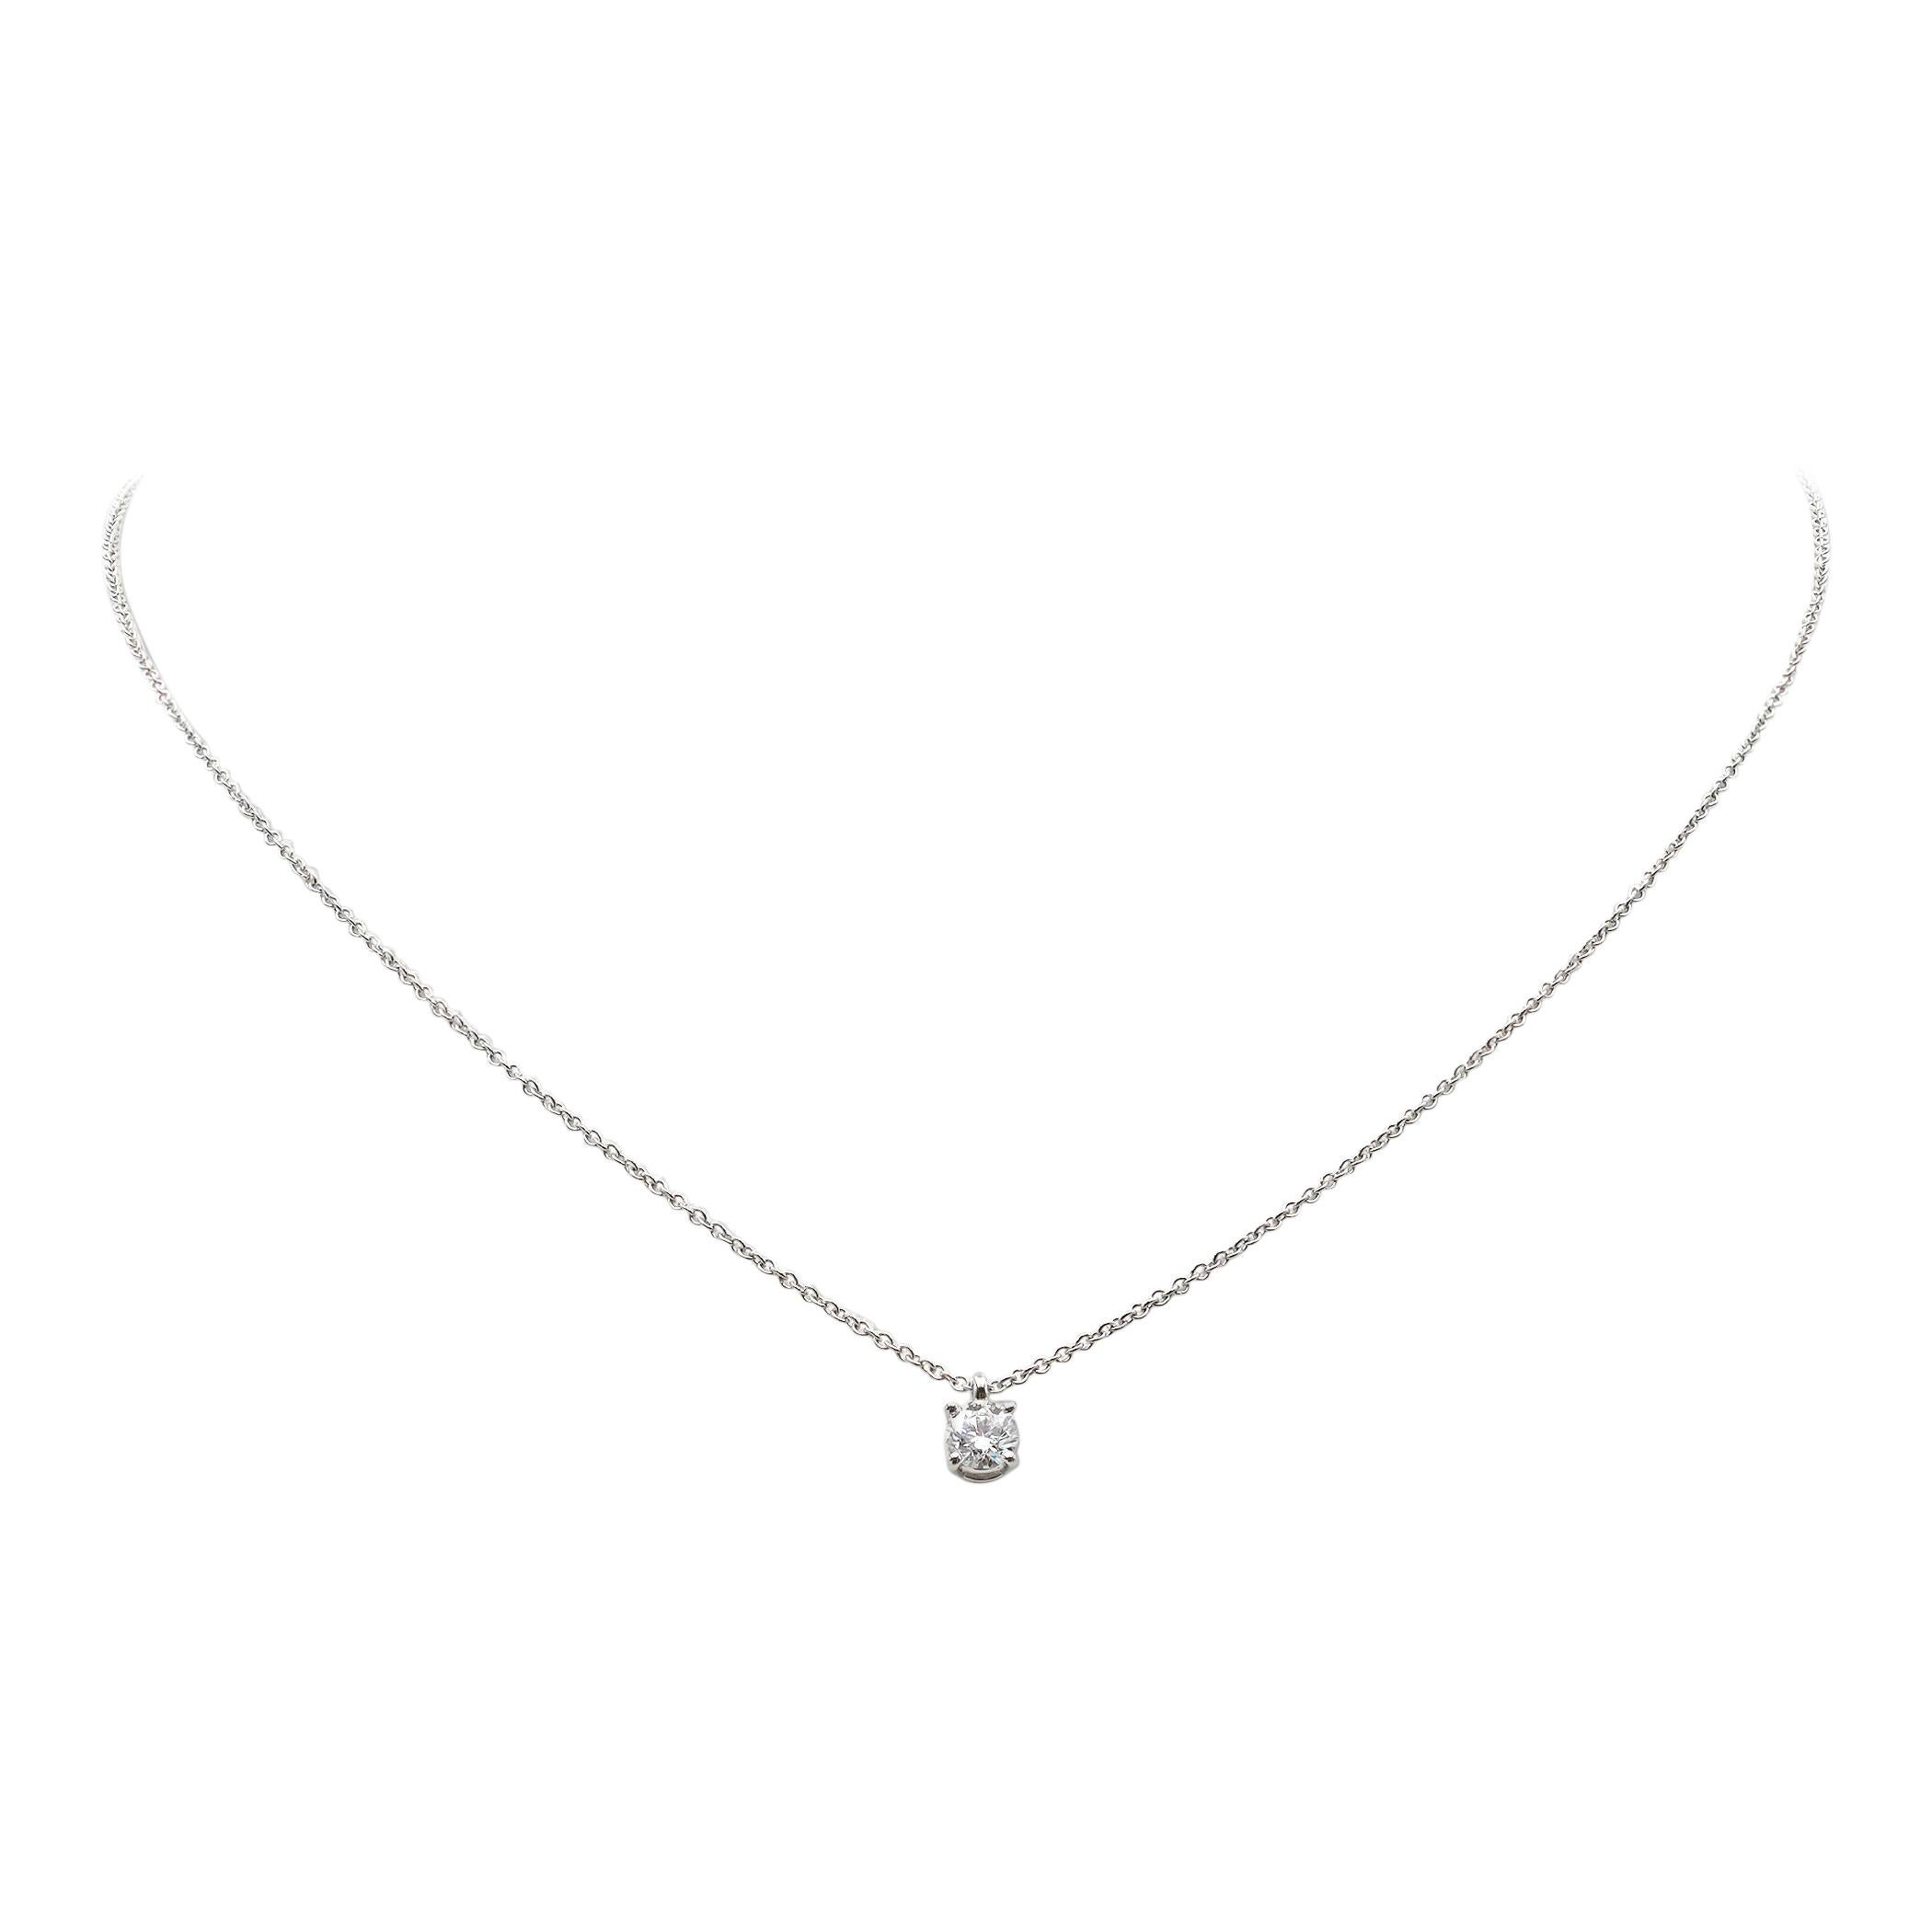 Tiffany & Co. Solitaire Diamond Pendant Necklace